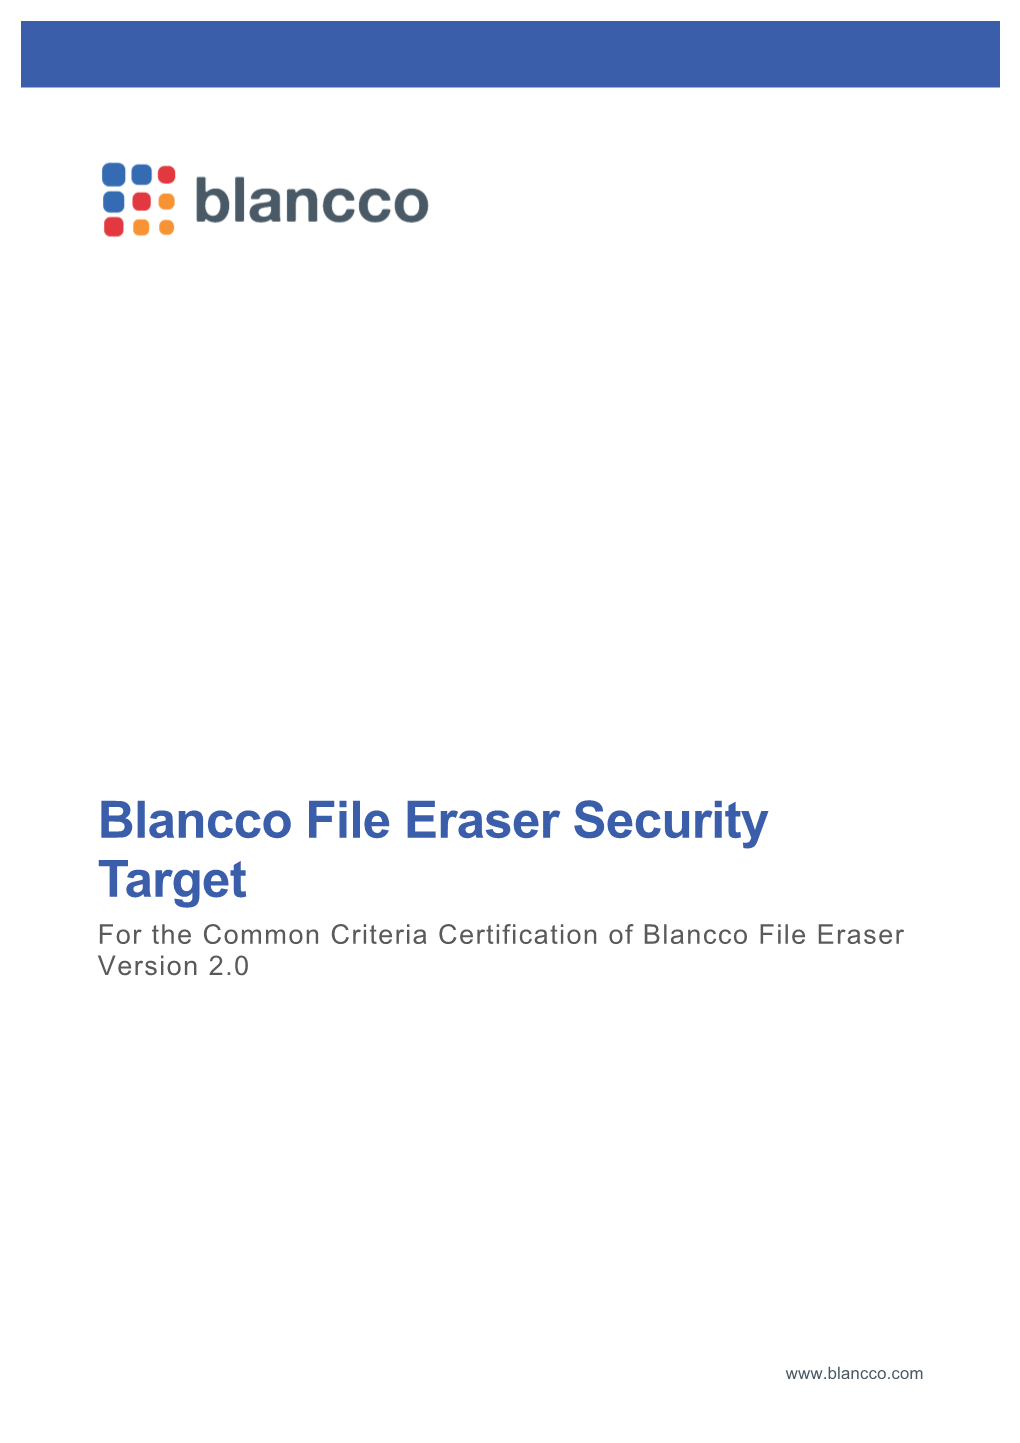 Blancco File Eraser Security Target for the Common Criteria Certification of Blancco File Eraser Version 2.0